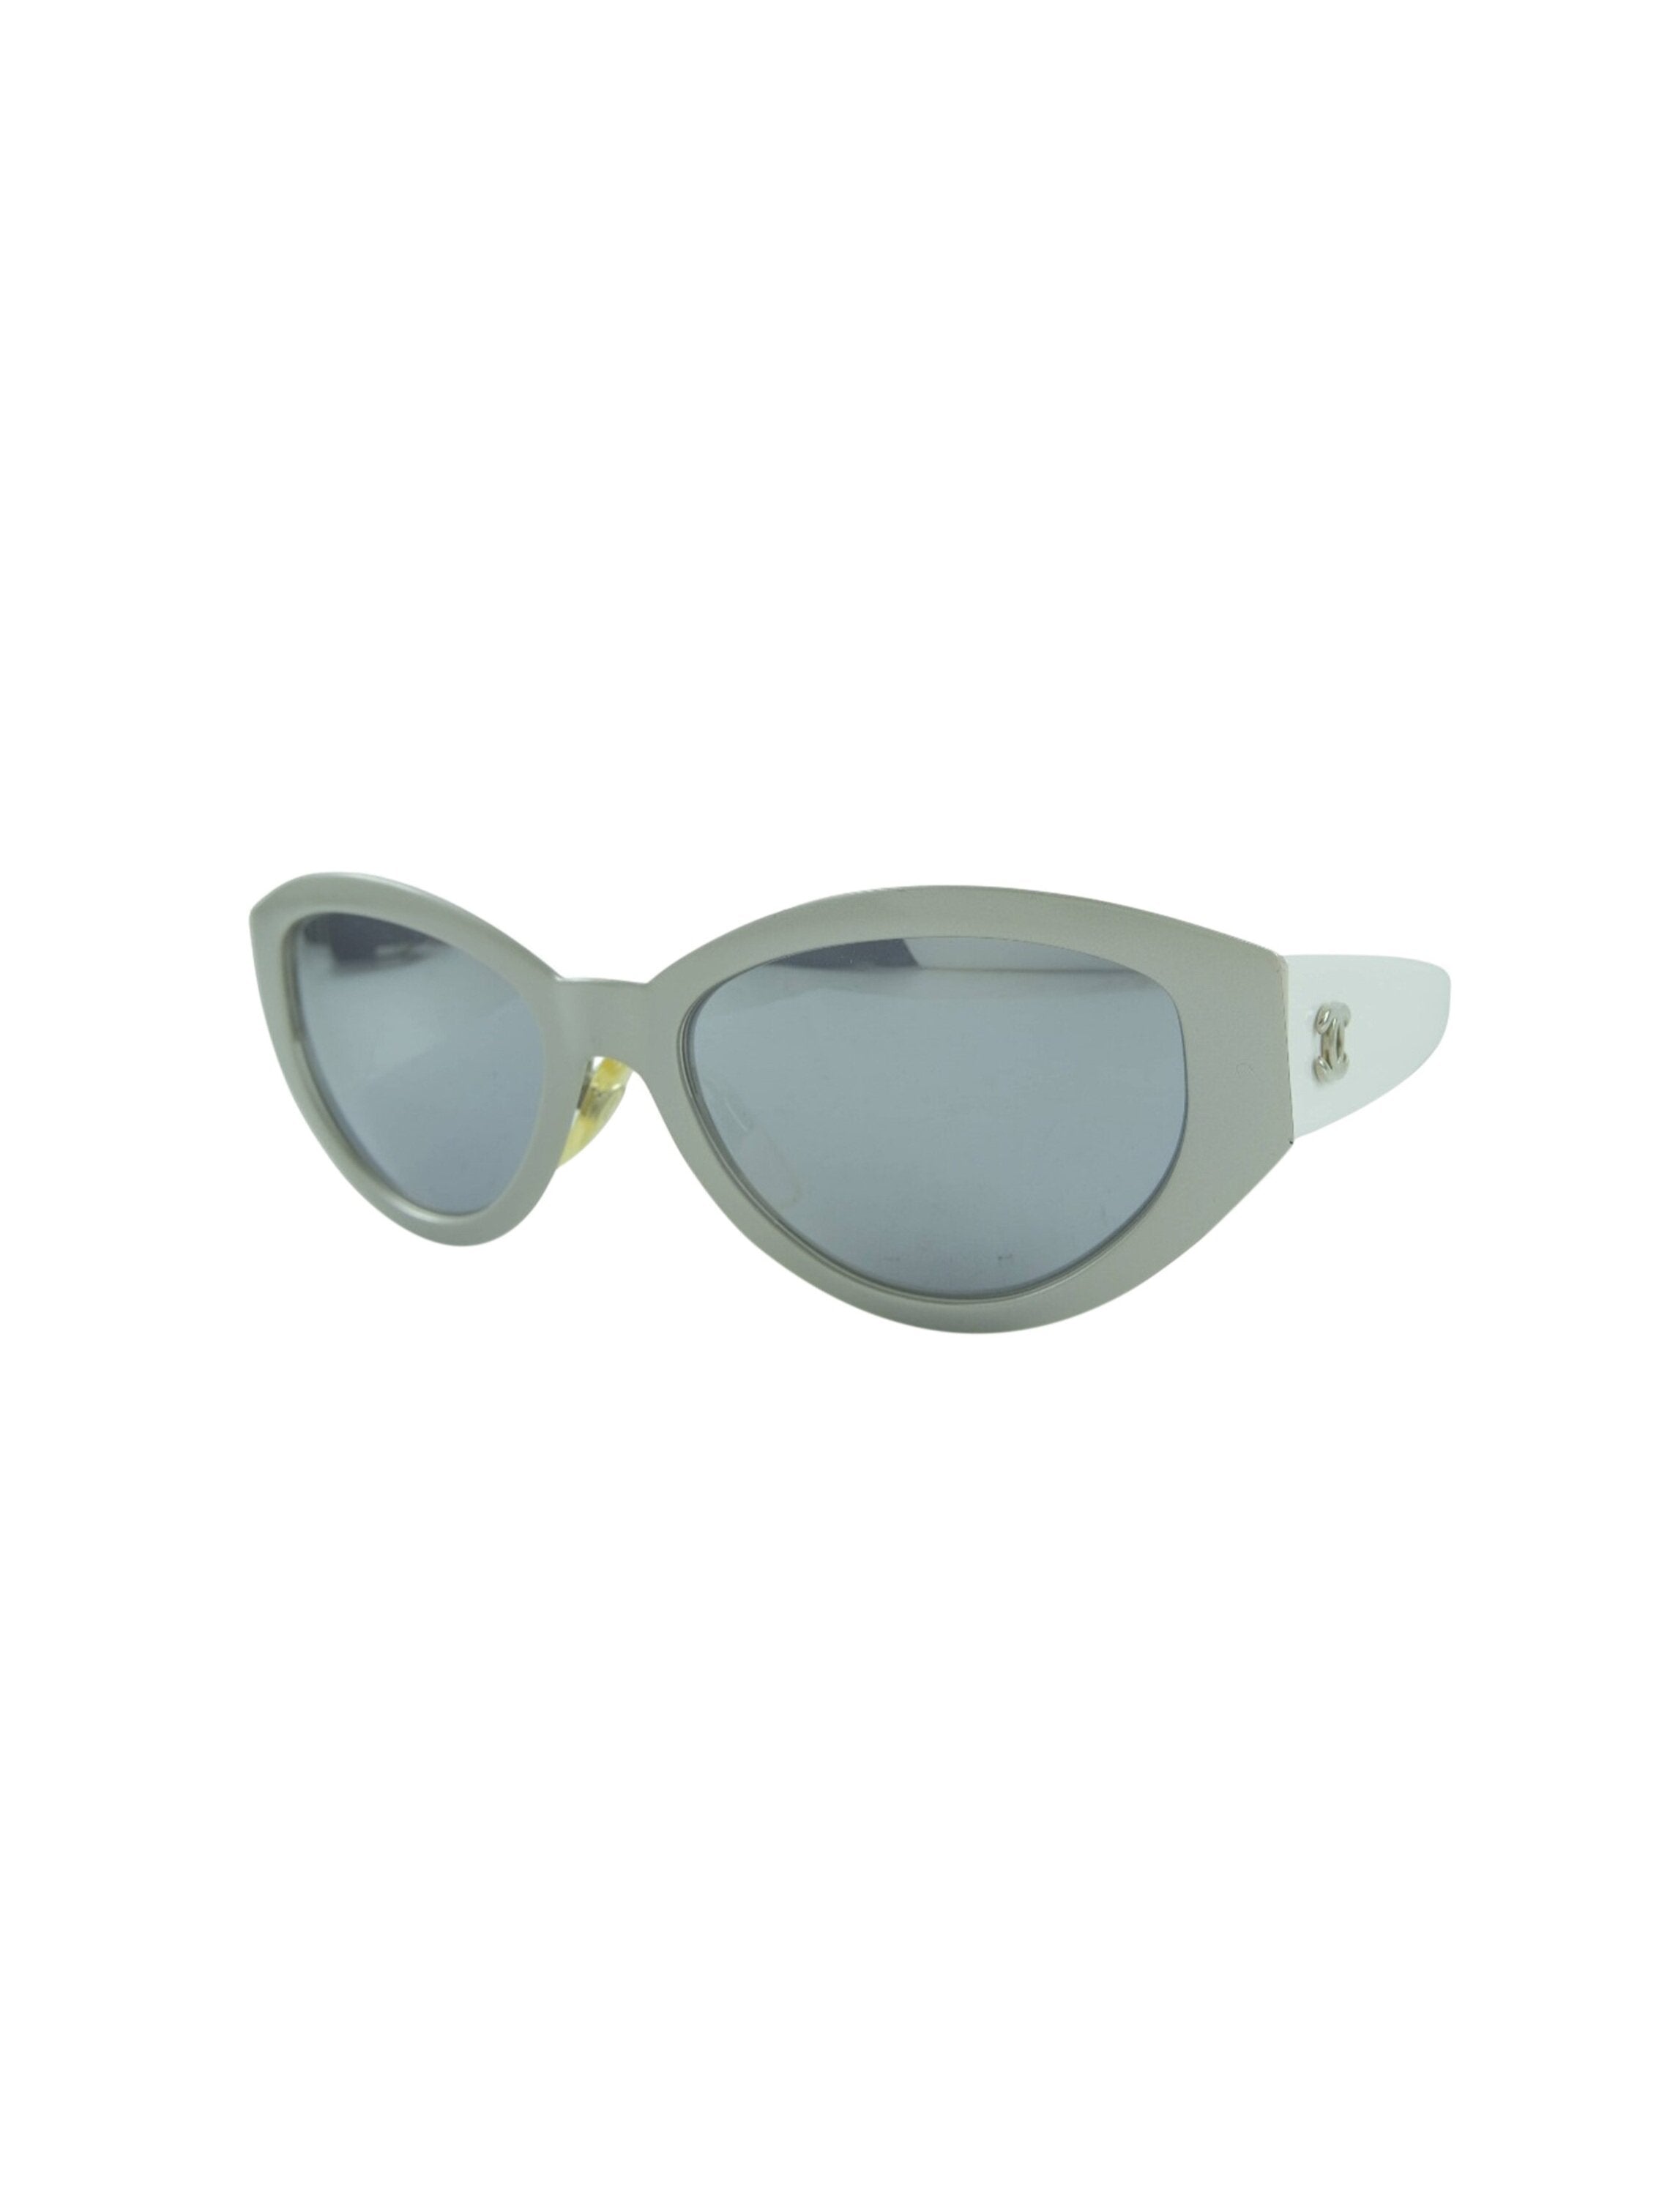 Chanel White and Silver Round Sunglasses · INTO